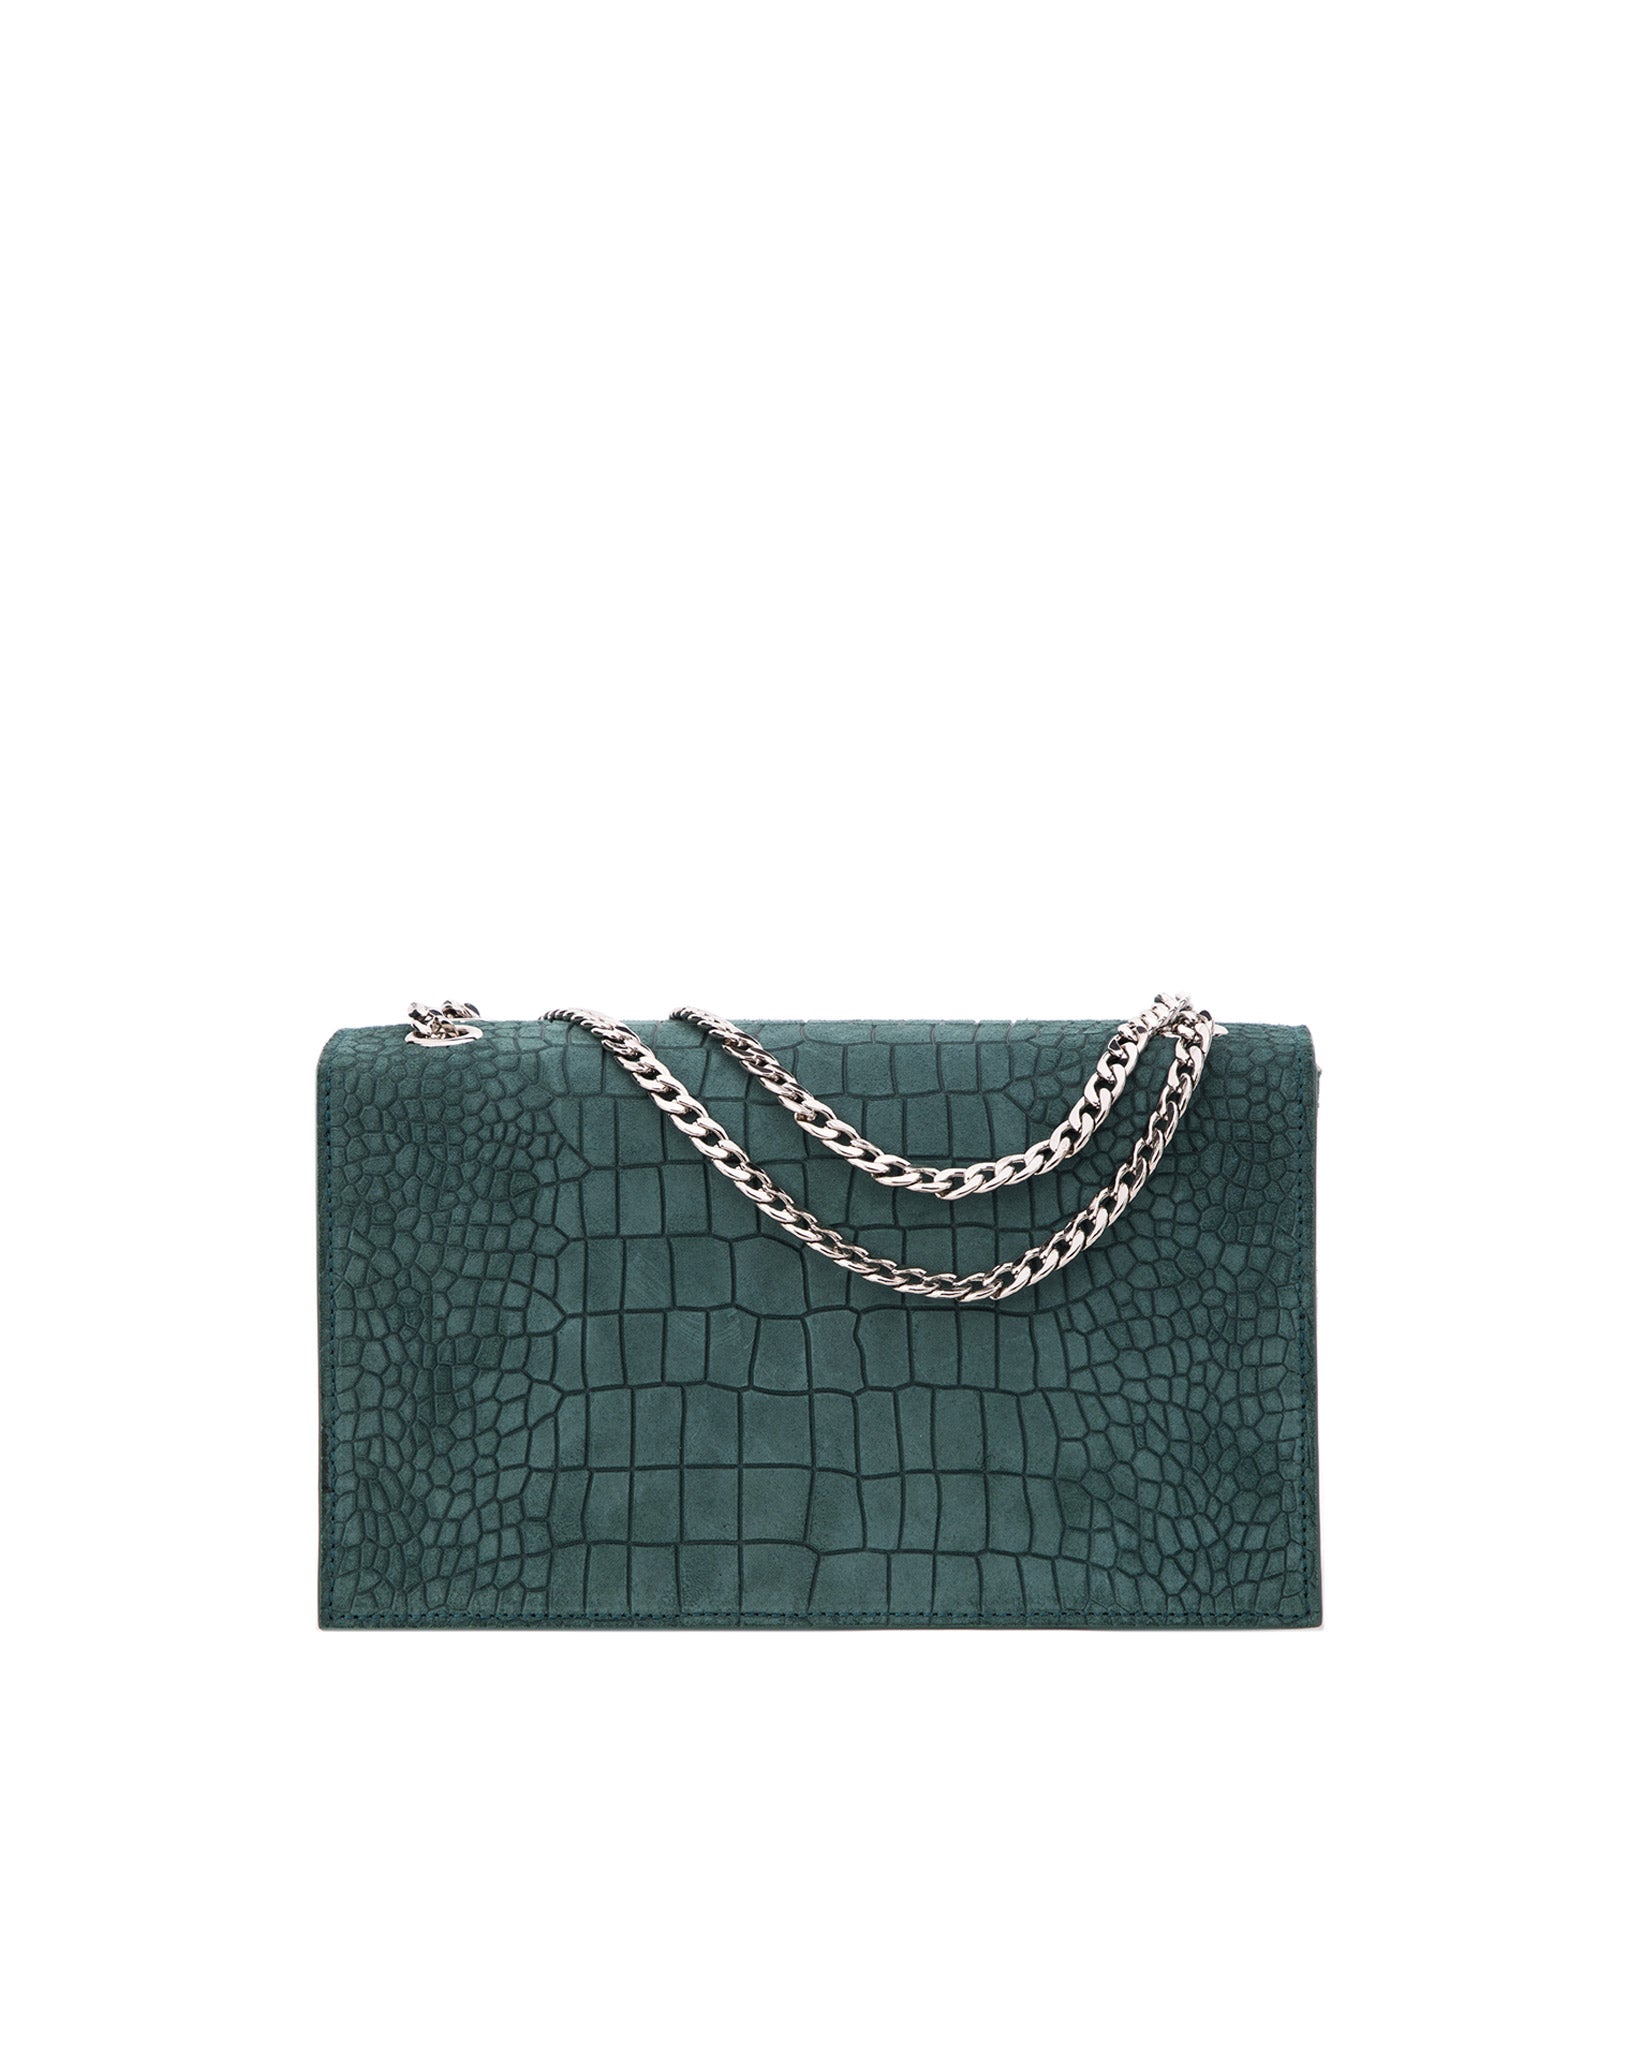 Genuine Crocodile Leather Women Handbag Bag Tote Green Emerald Cross body  Strap